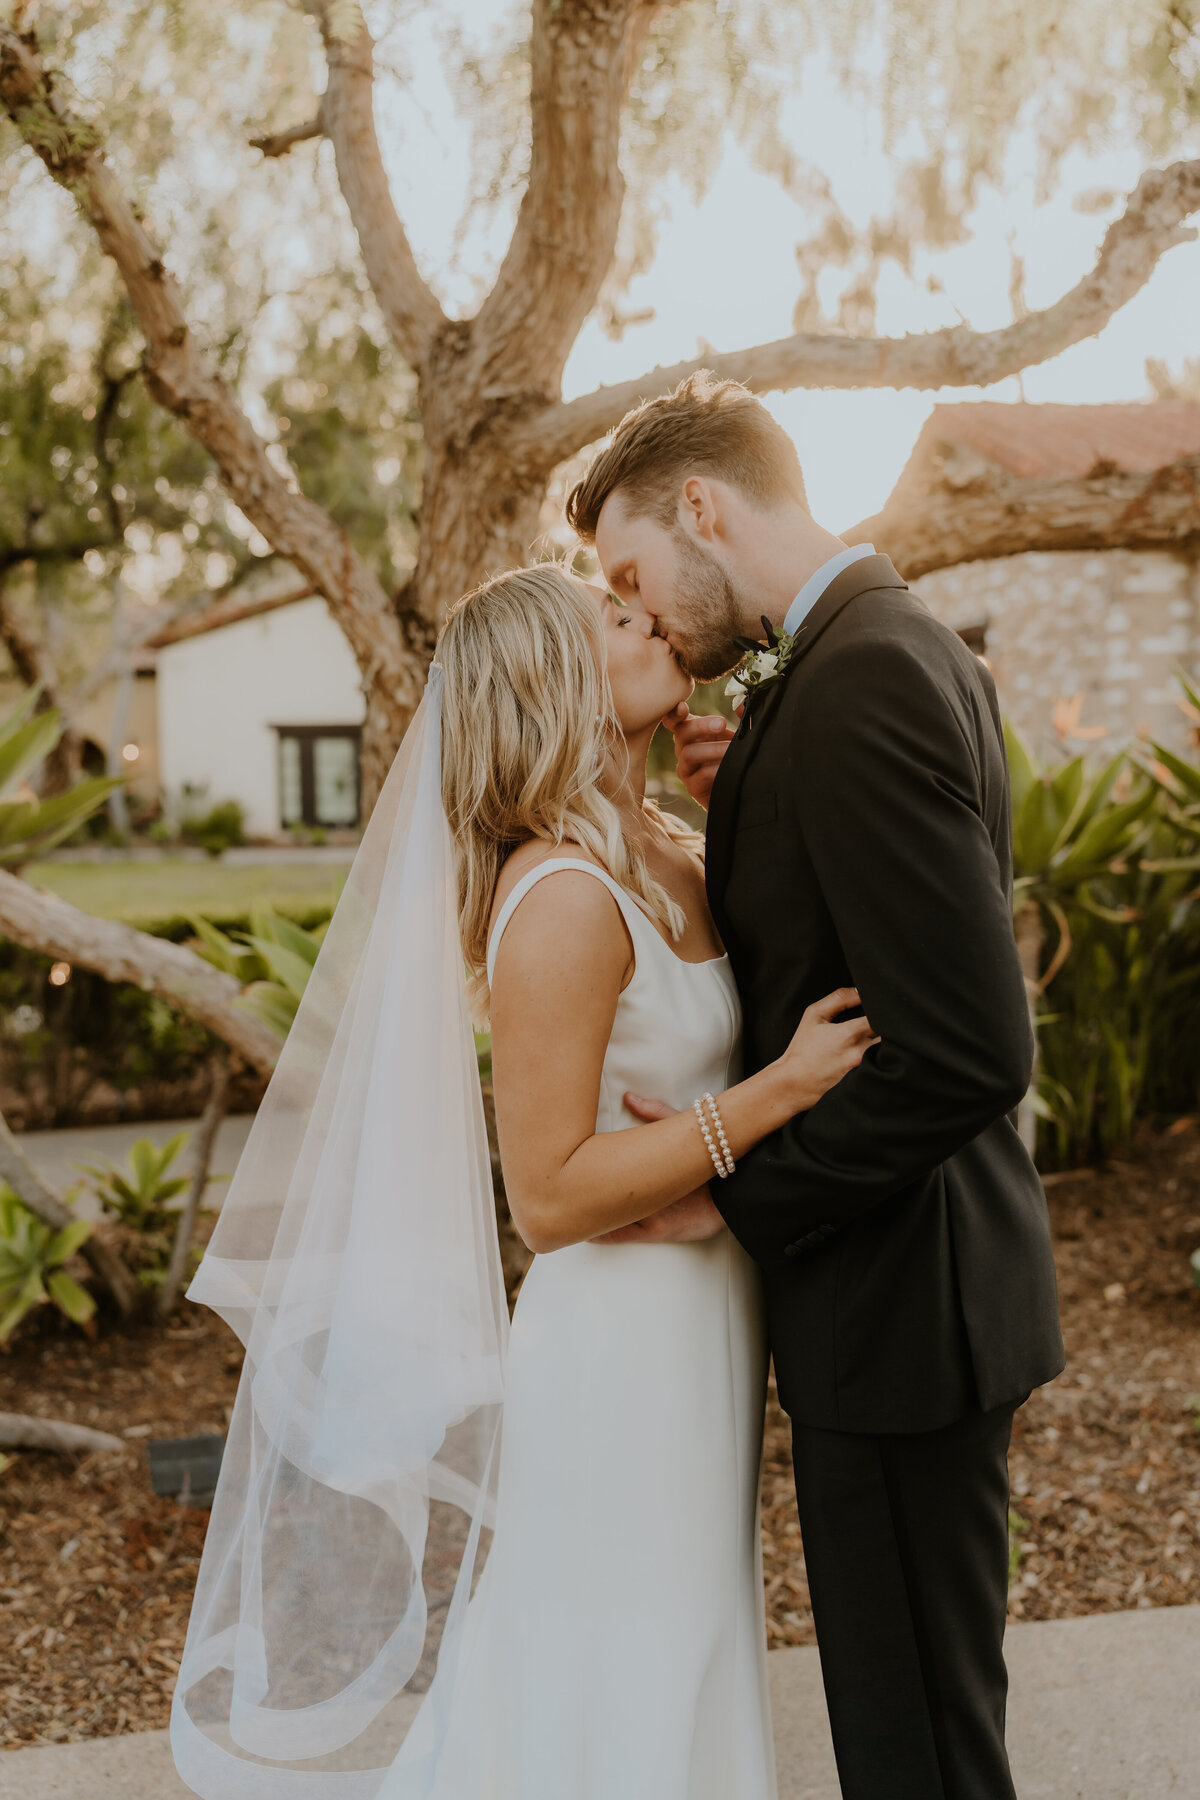 Temecula, California Wedding photographer Yescphotography bride and groom kiss on their wedding day